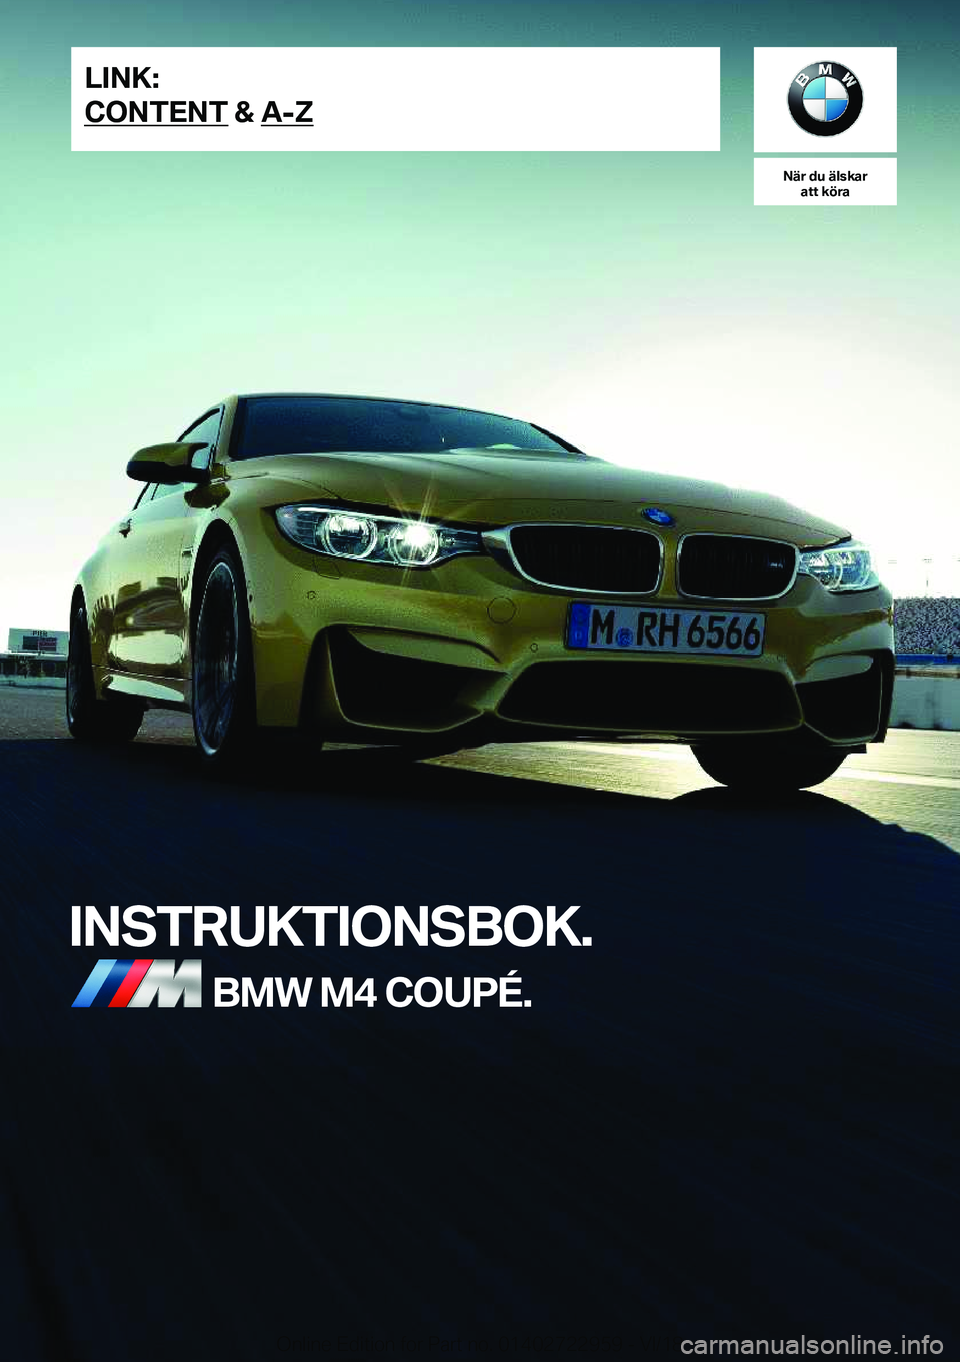 BMW M4 2019  InstruktionsbÖcker (in Swedish) �N�ä�r��d�u��ä�l�s�k�a�r�a�t�t��k�